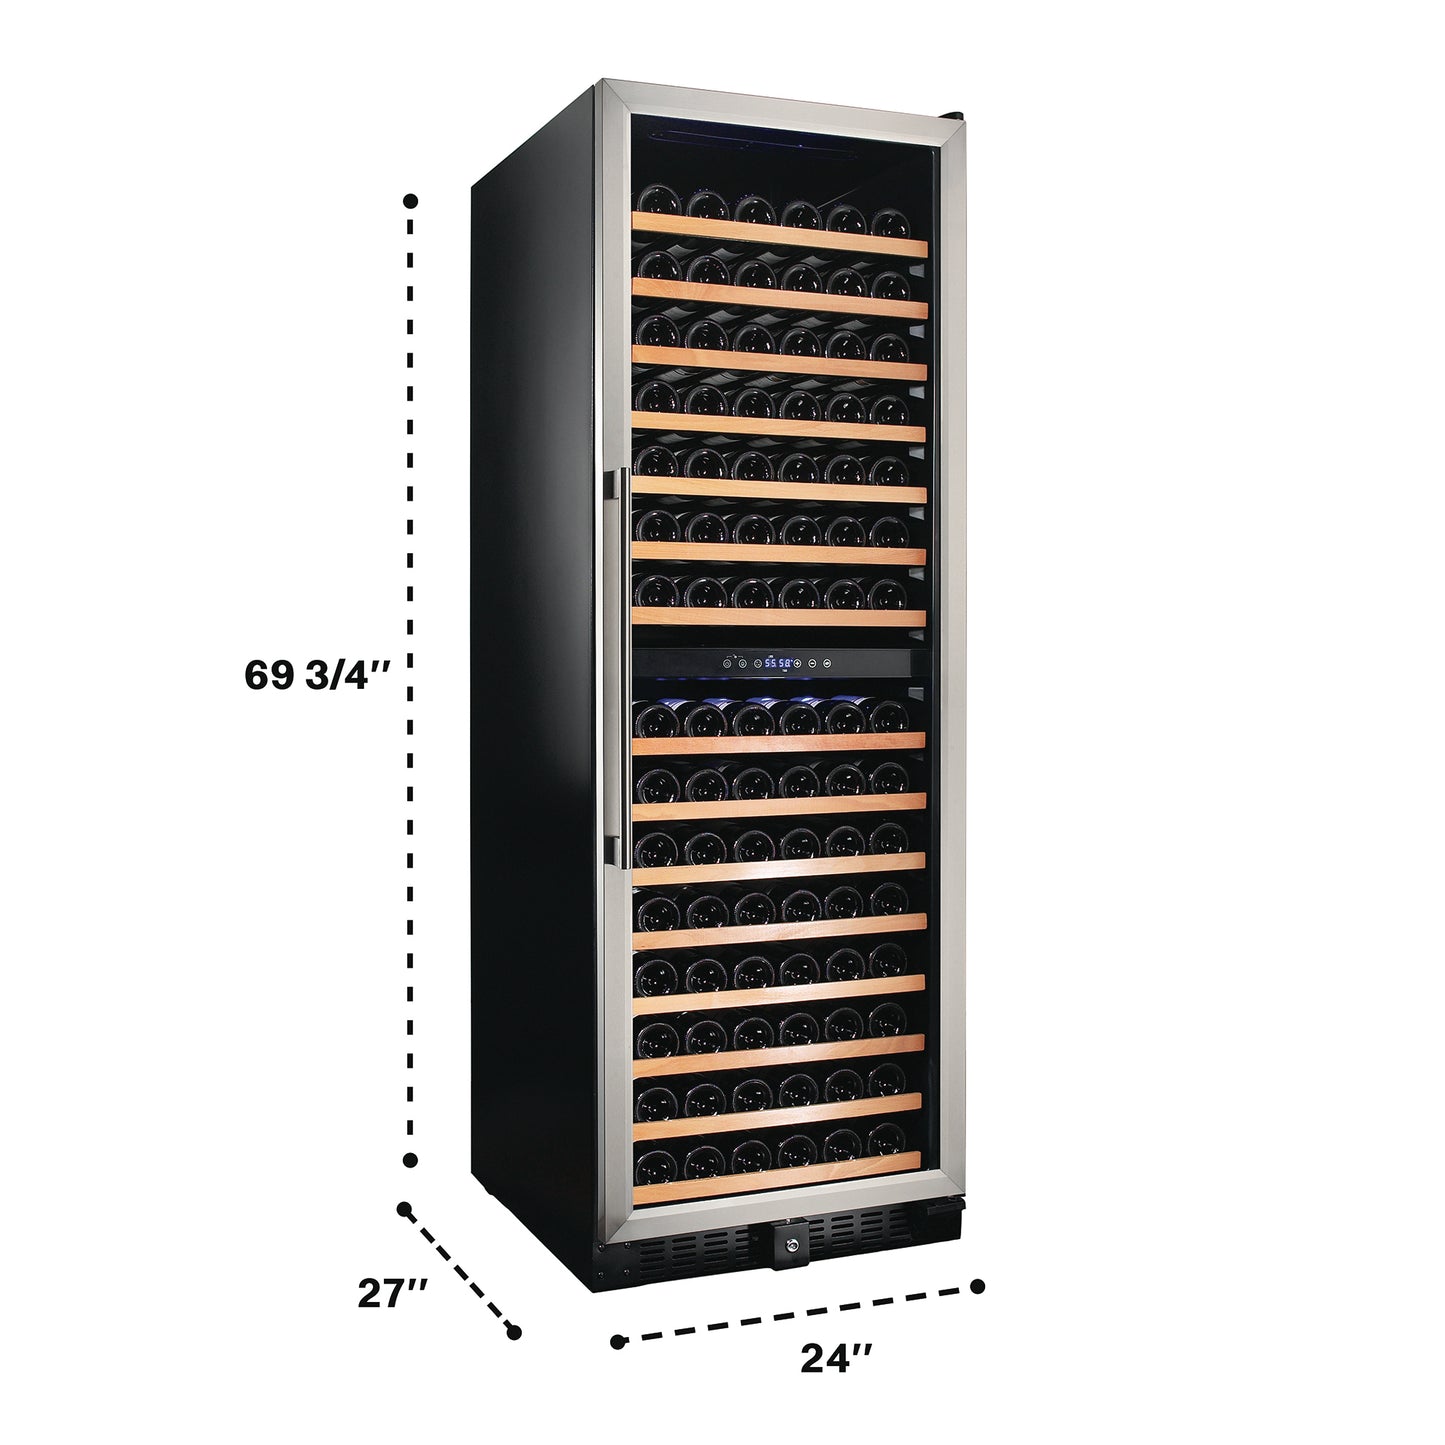 Smith & Hanks 24" Dual Zone Wine Cooler | Holds 166 Bottles